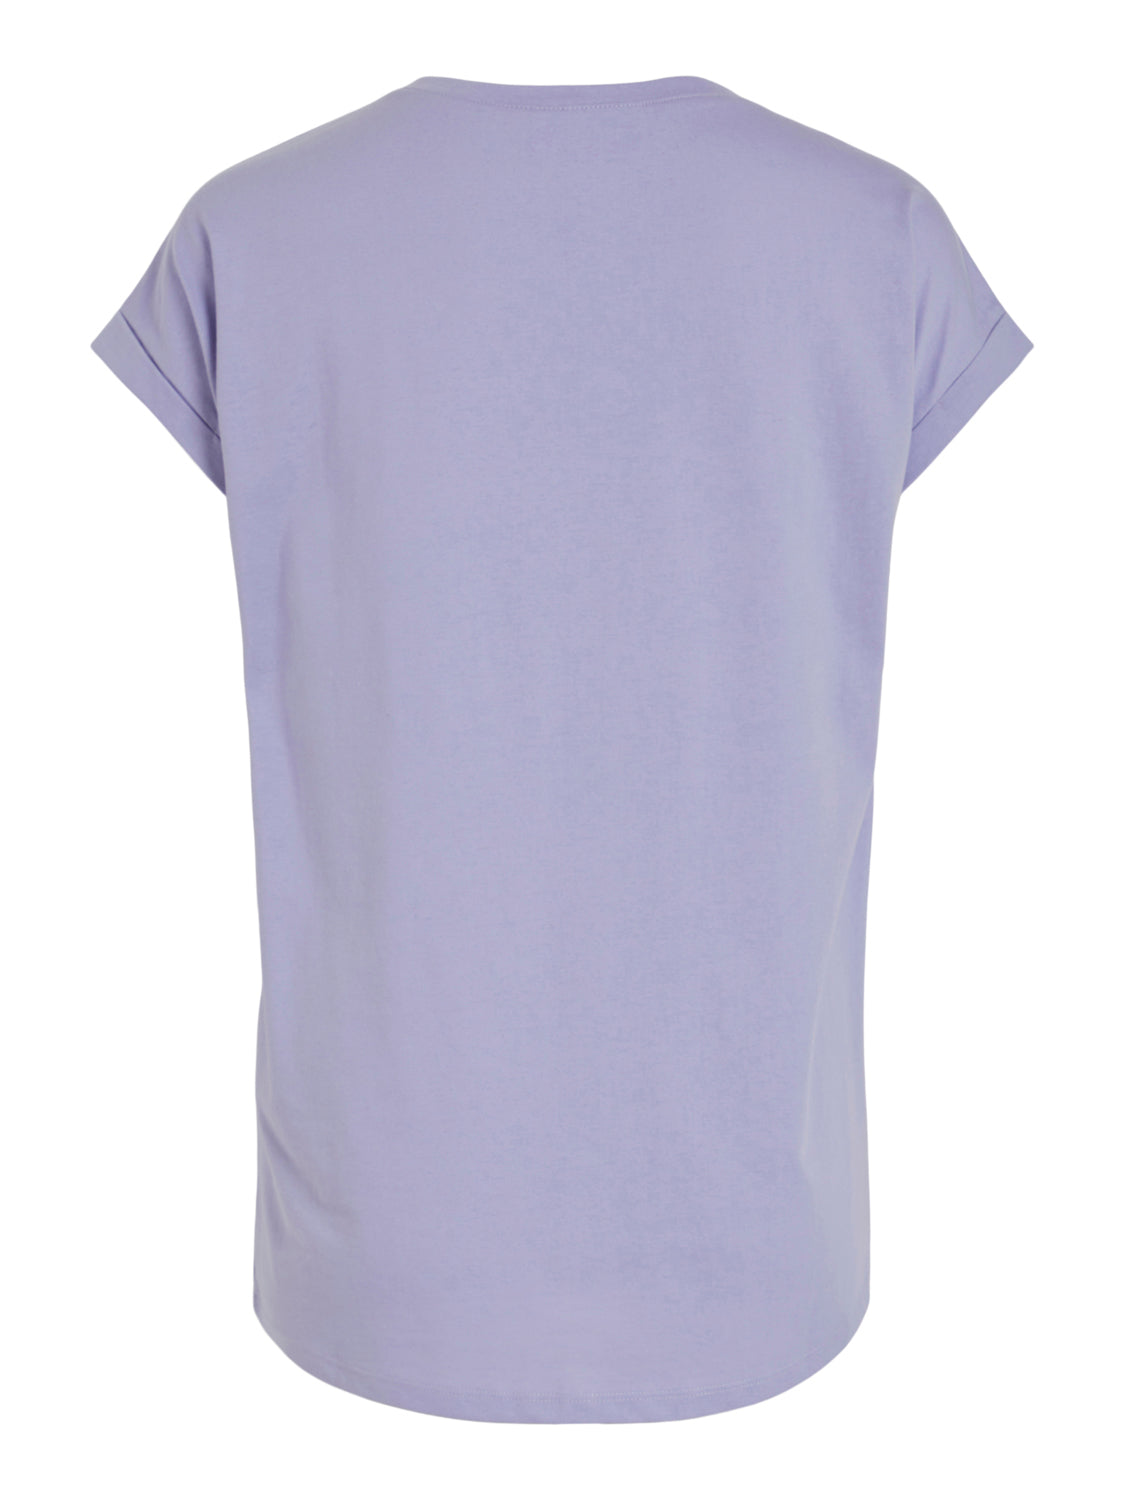 VIDREAMERS T-shirts & Tops - Sweet Lavender